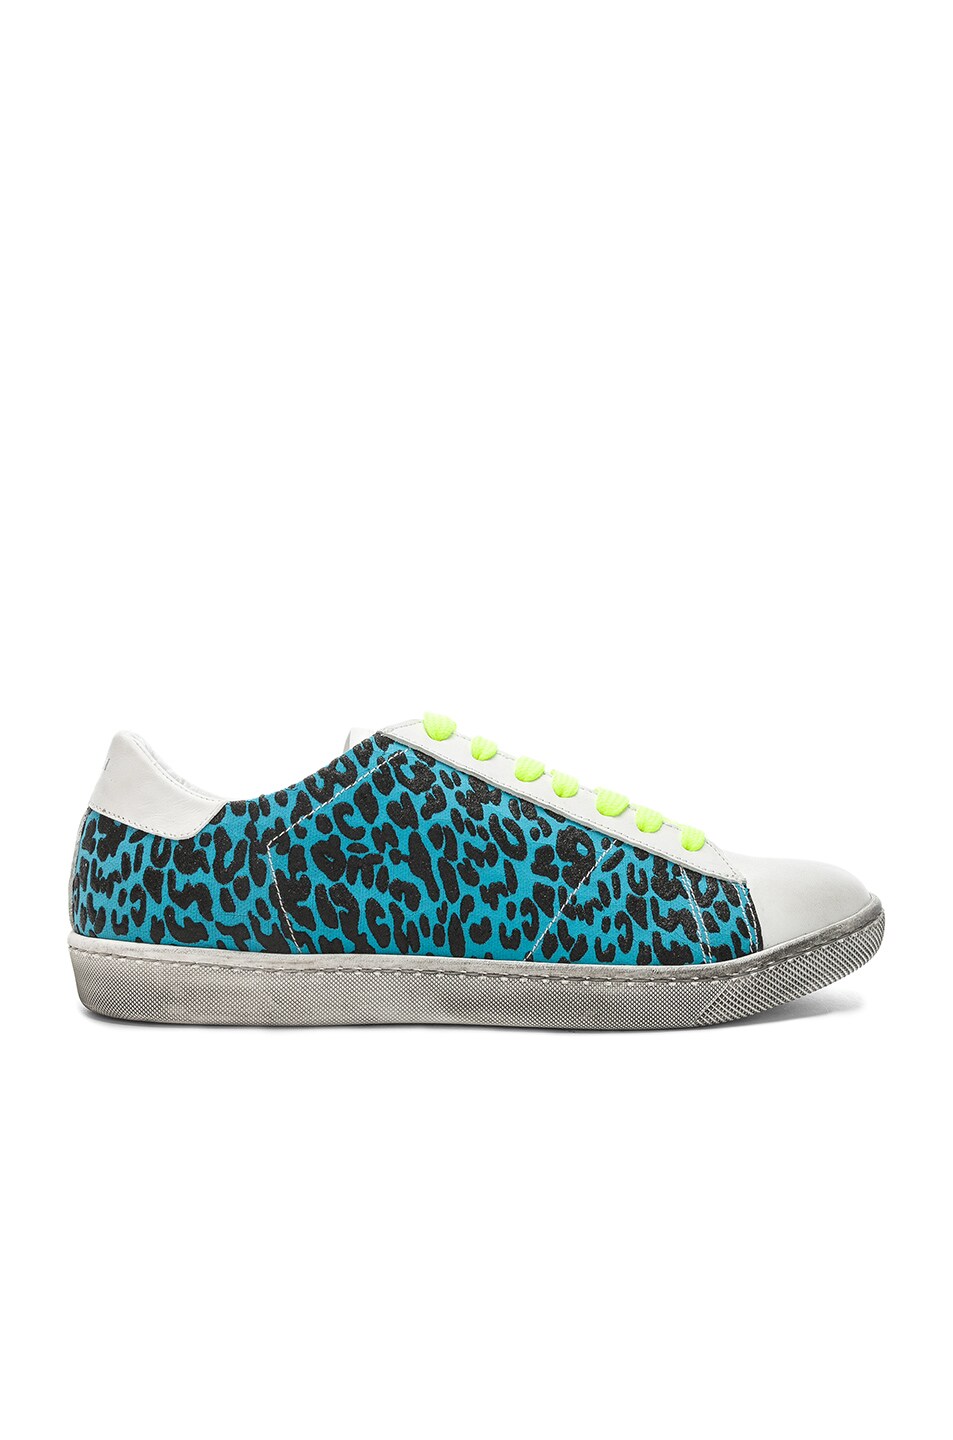 Image 1 of Amiri Viper Neon Leopard Low Sneaker in Neon Blue & Black